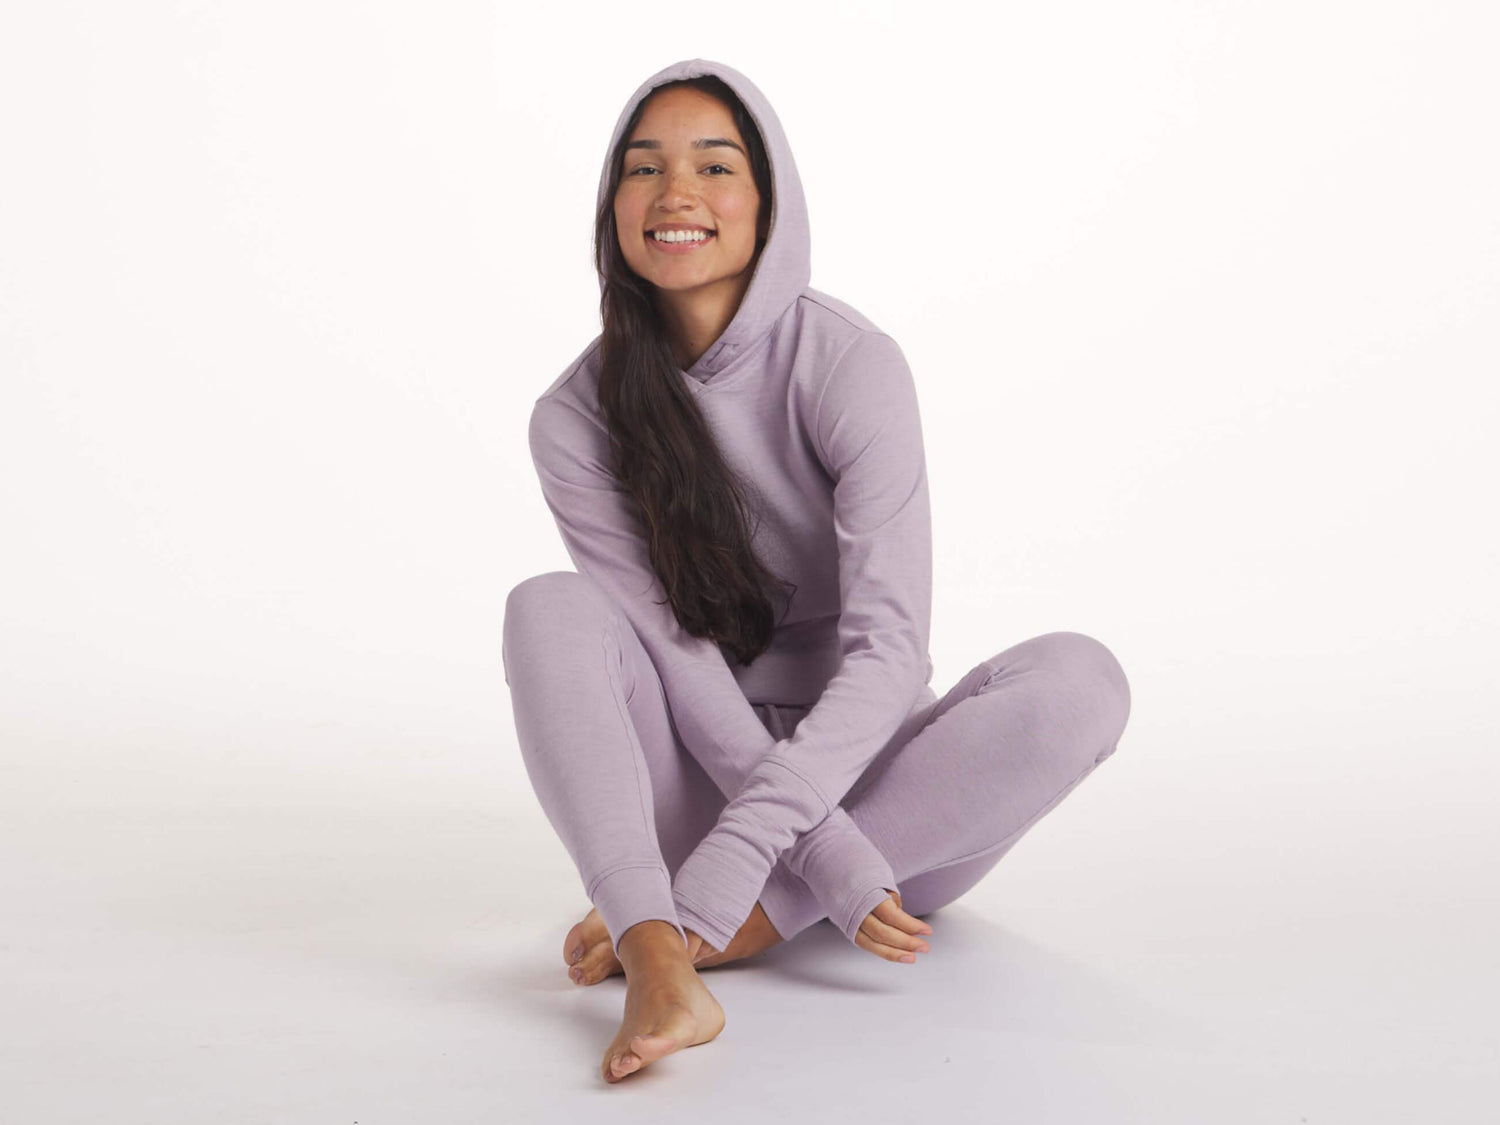 women's lavender breathe hoodie on model